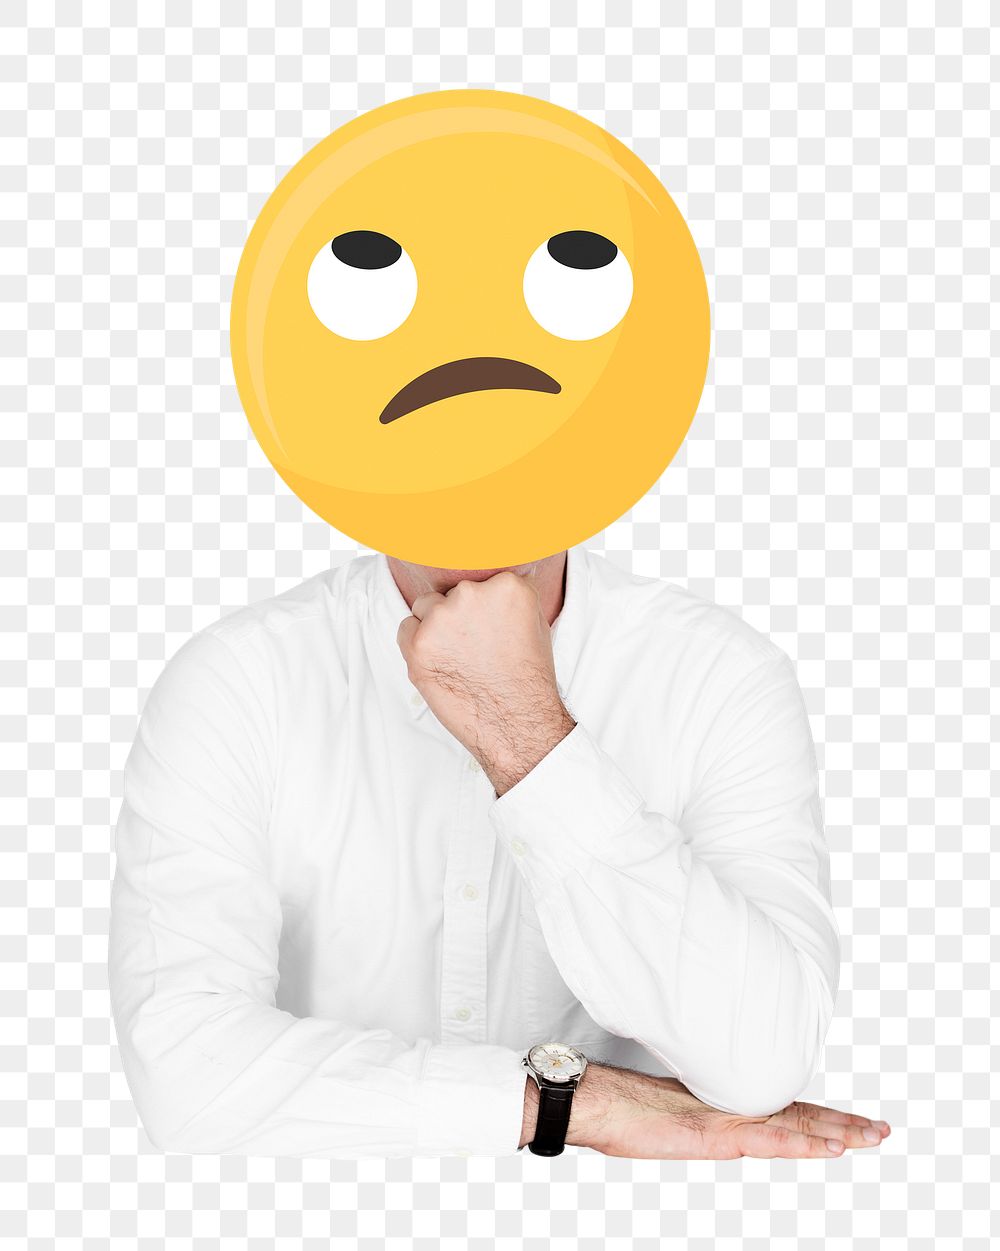 PNG Unamused face emoji portrait on a man, collage element, transparent background